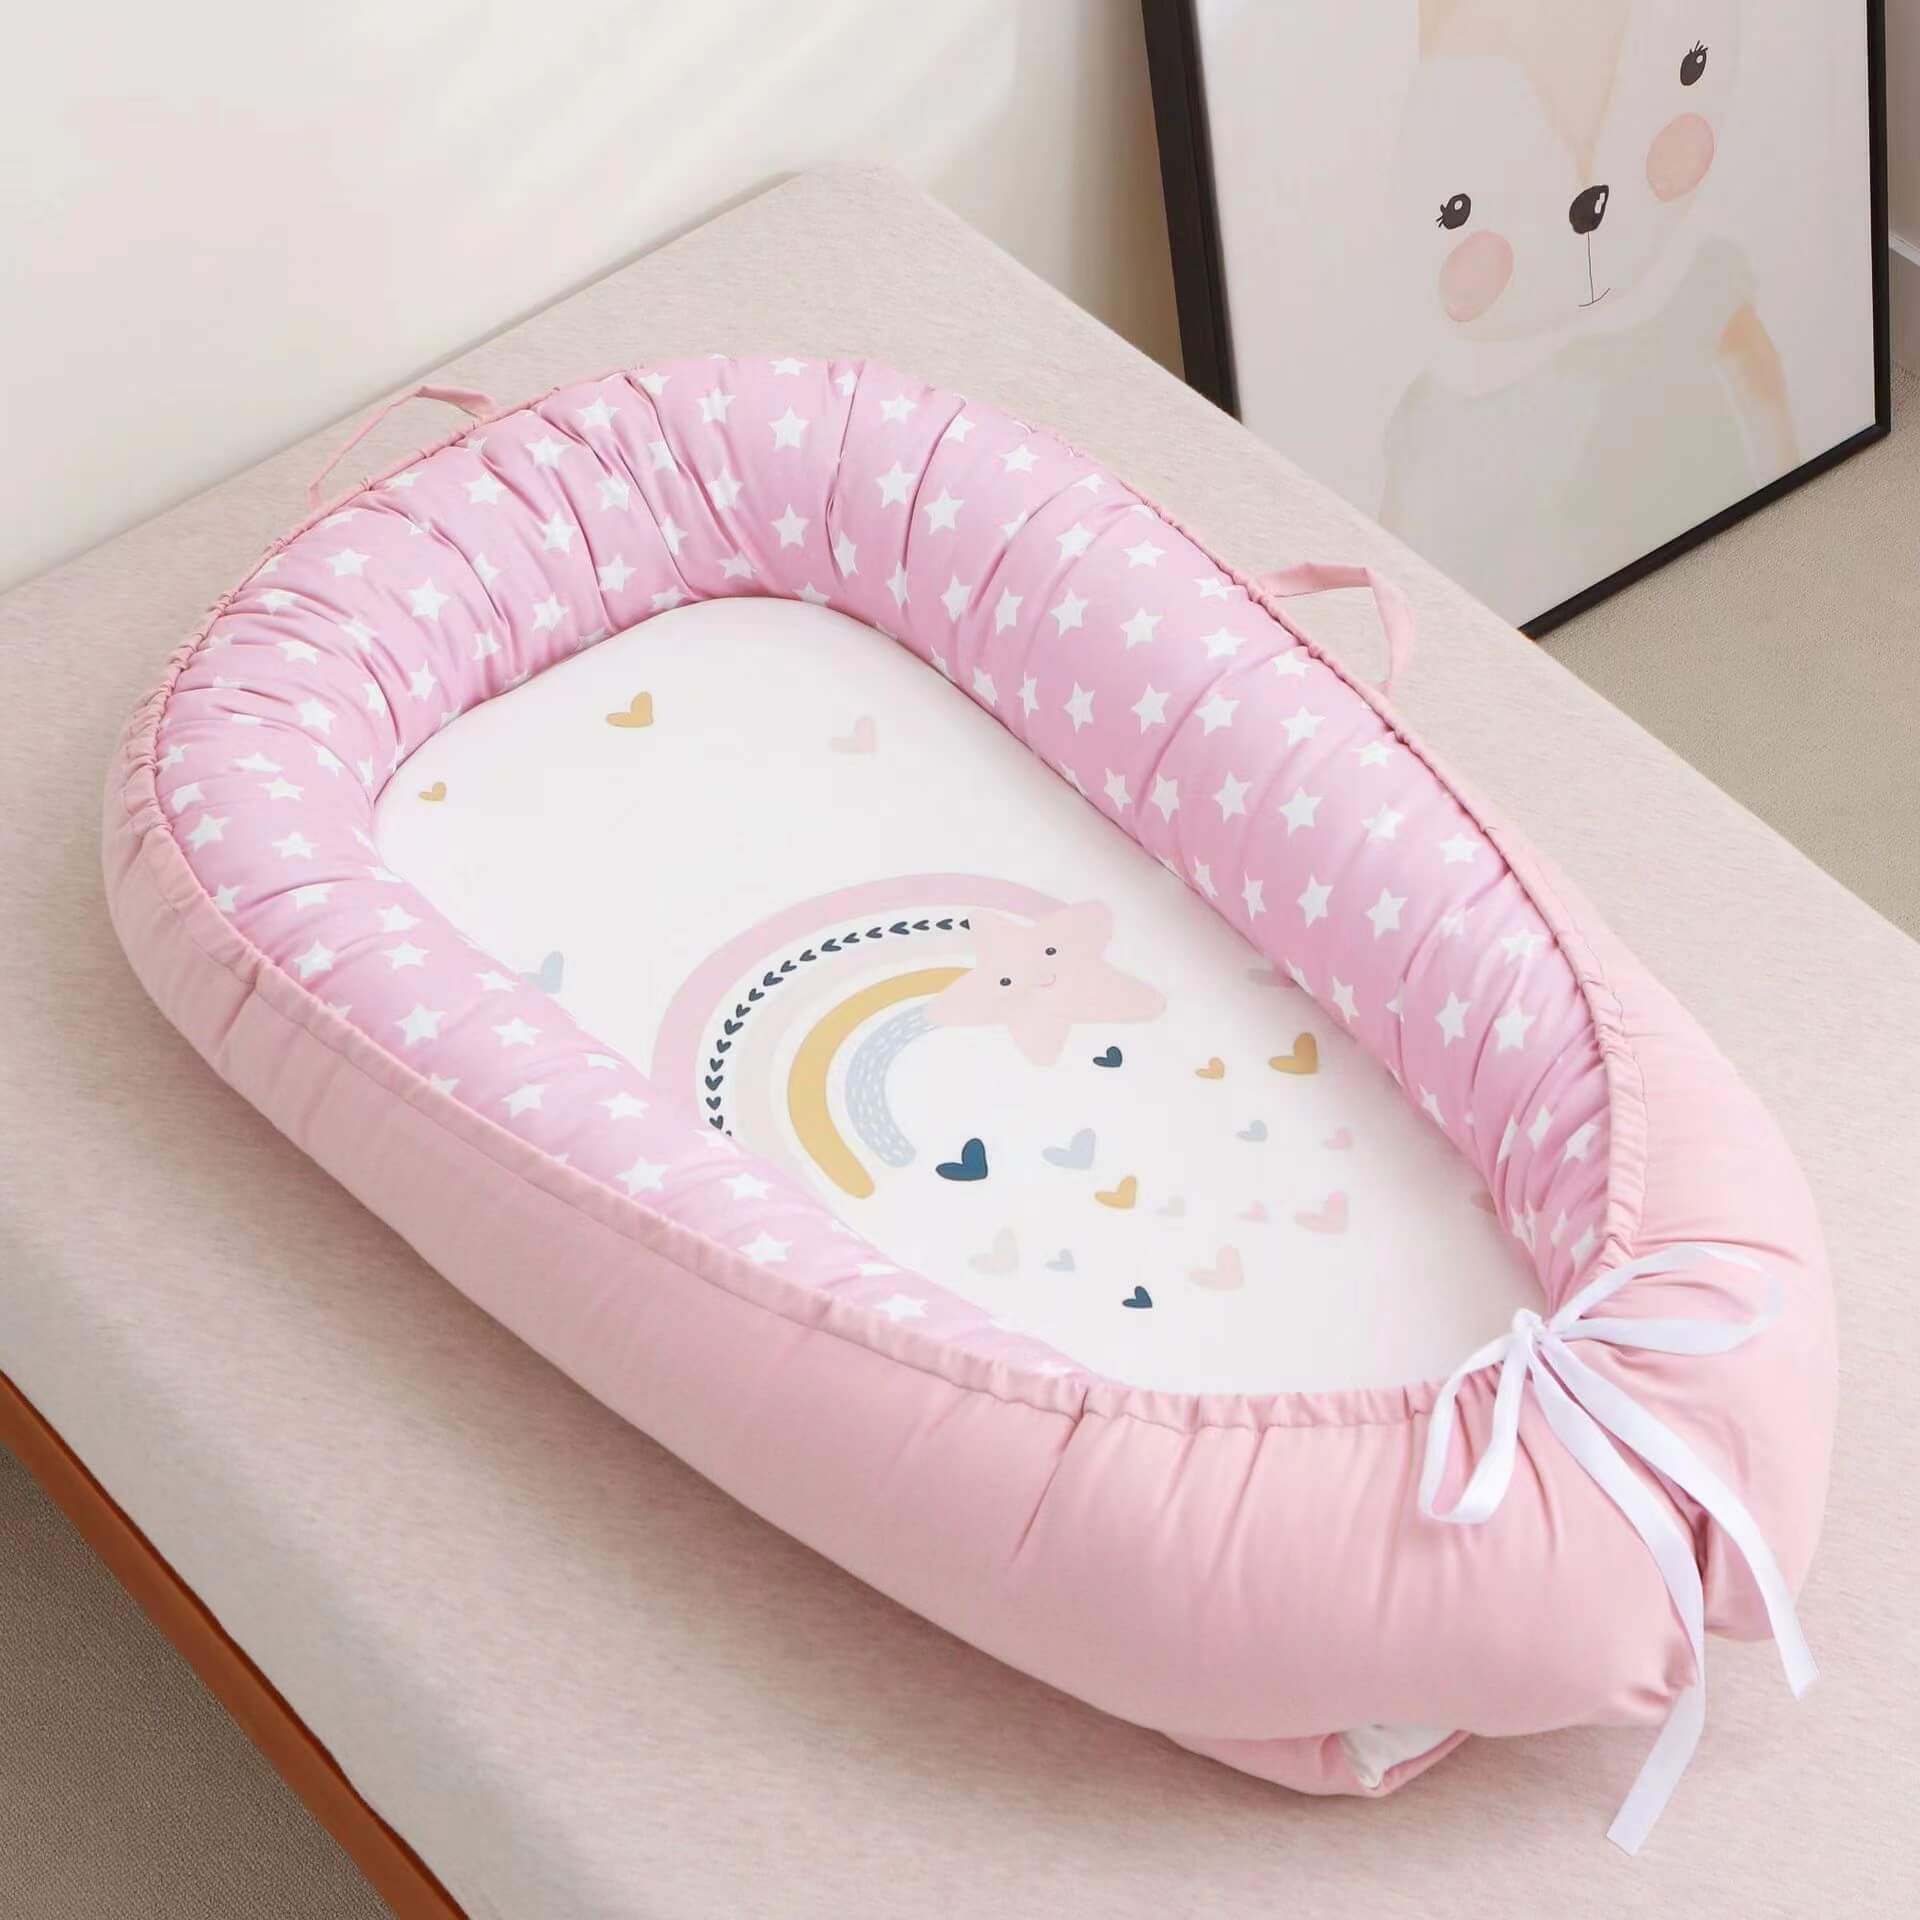 Best Baby Play Nest Pillow